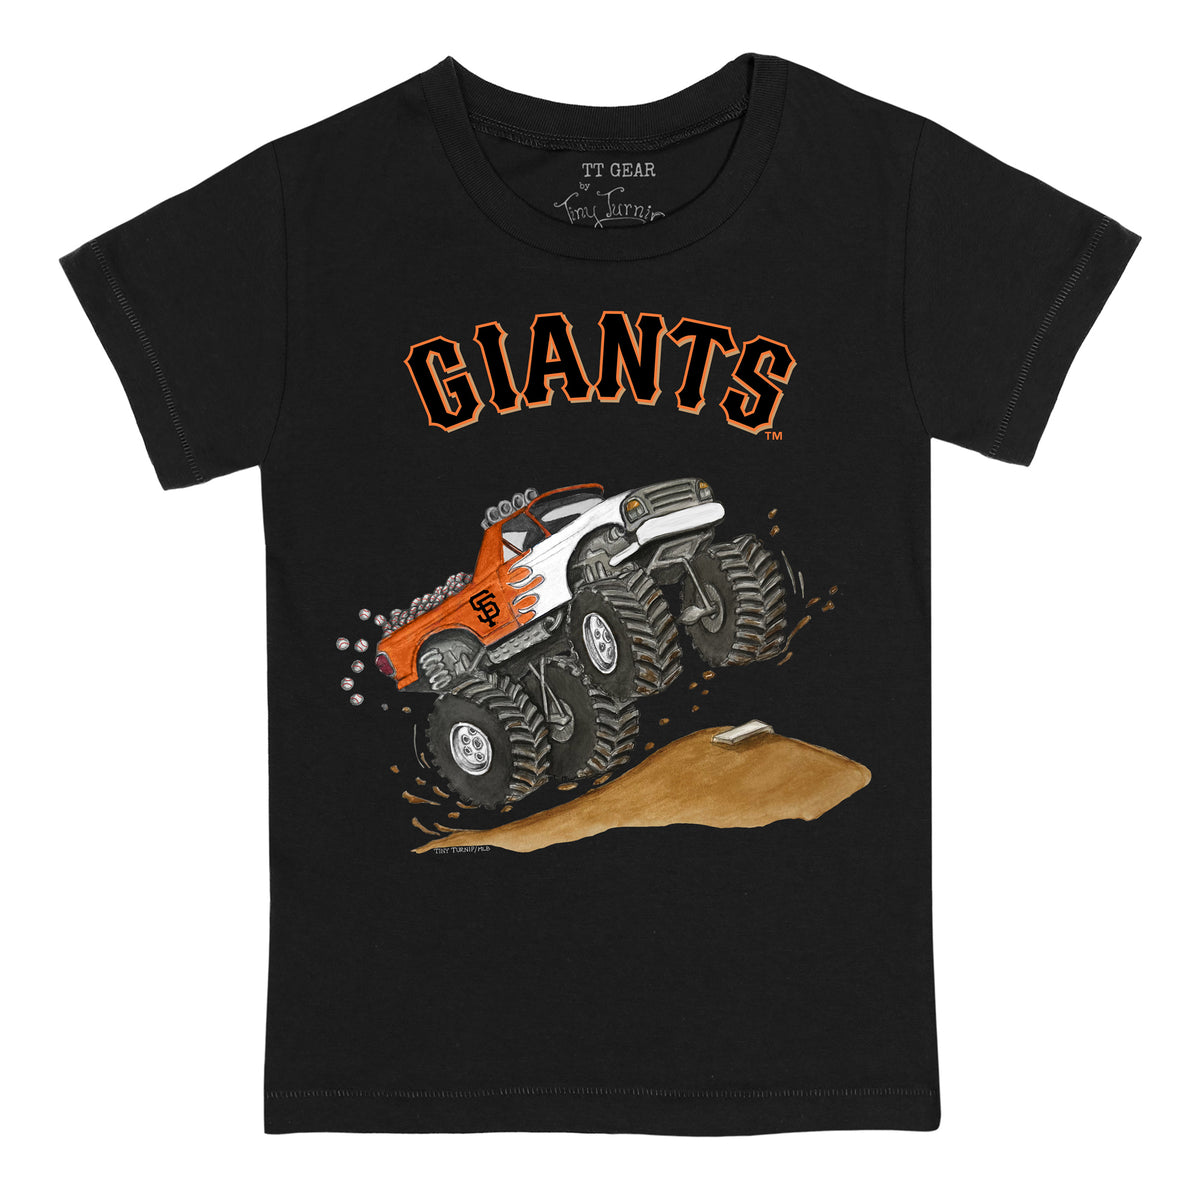 San Francisco Giants Monster Truck Tee Shirt